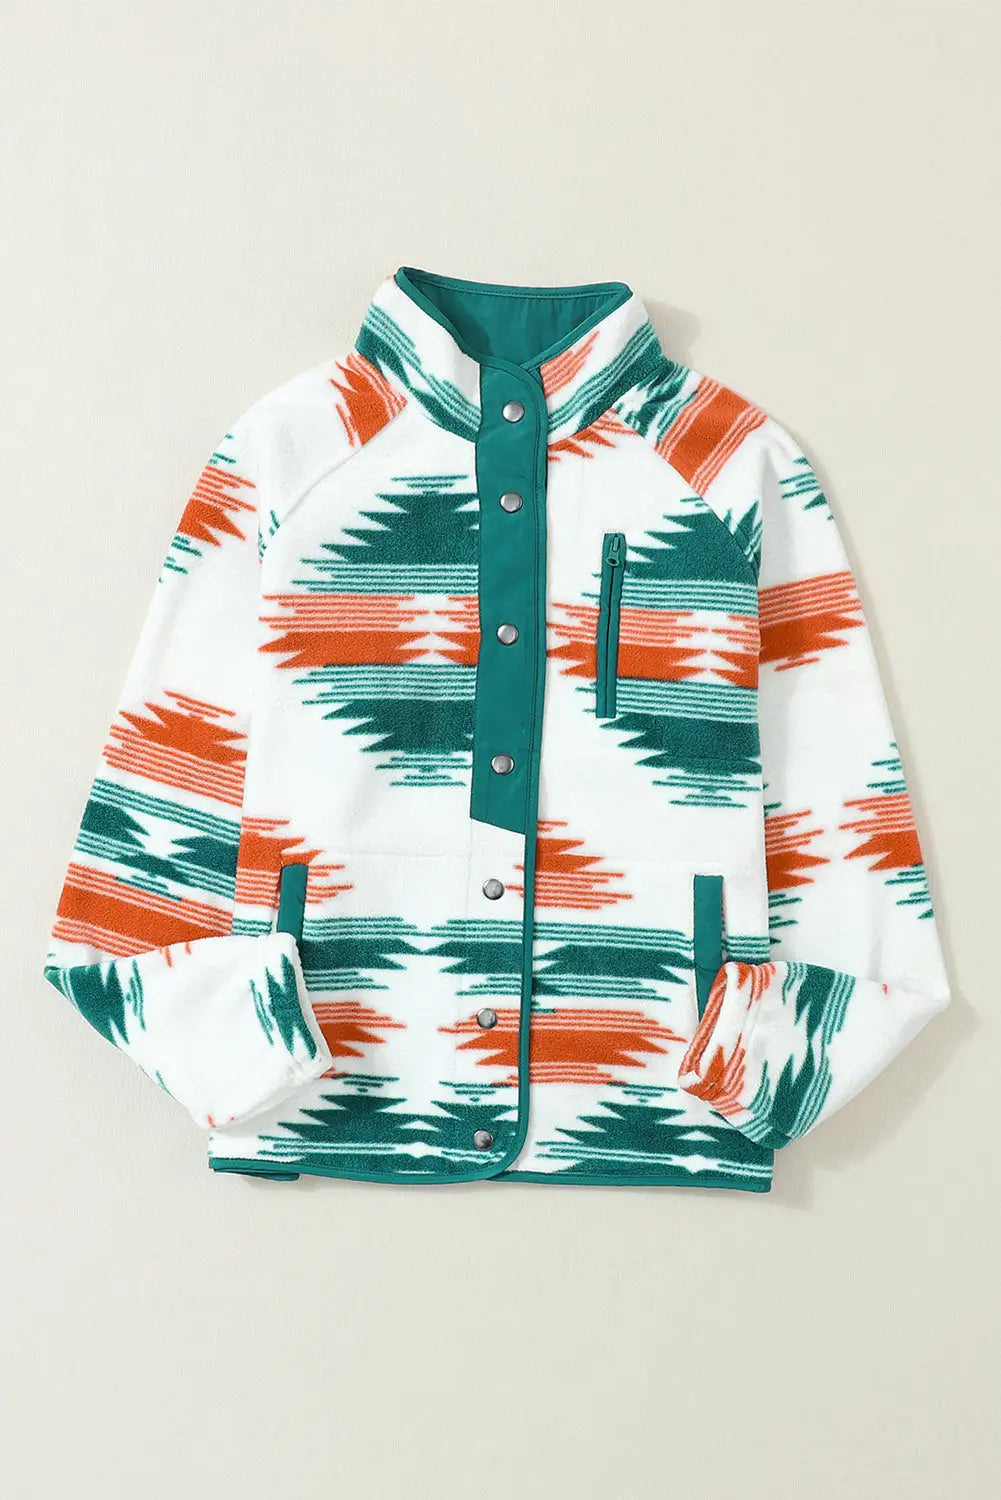 Multicolor fuzzy aztec western fashion vest jacket - outerwear